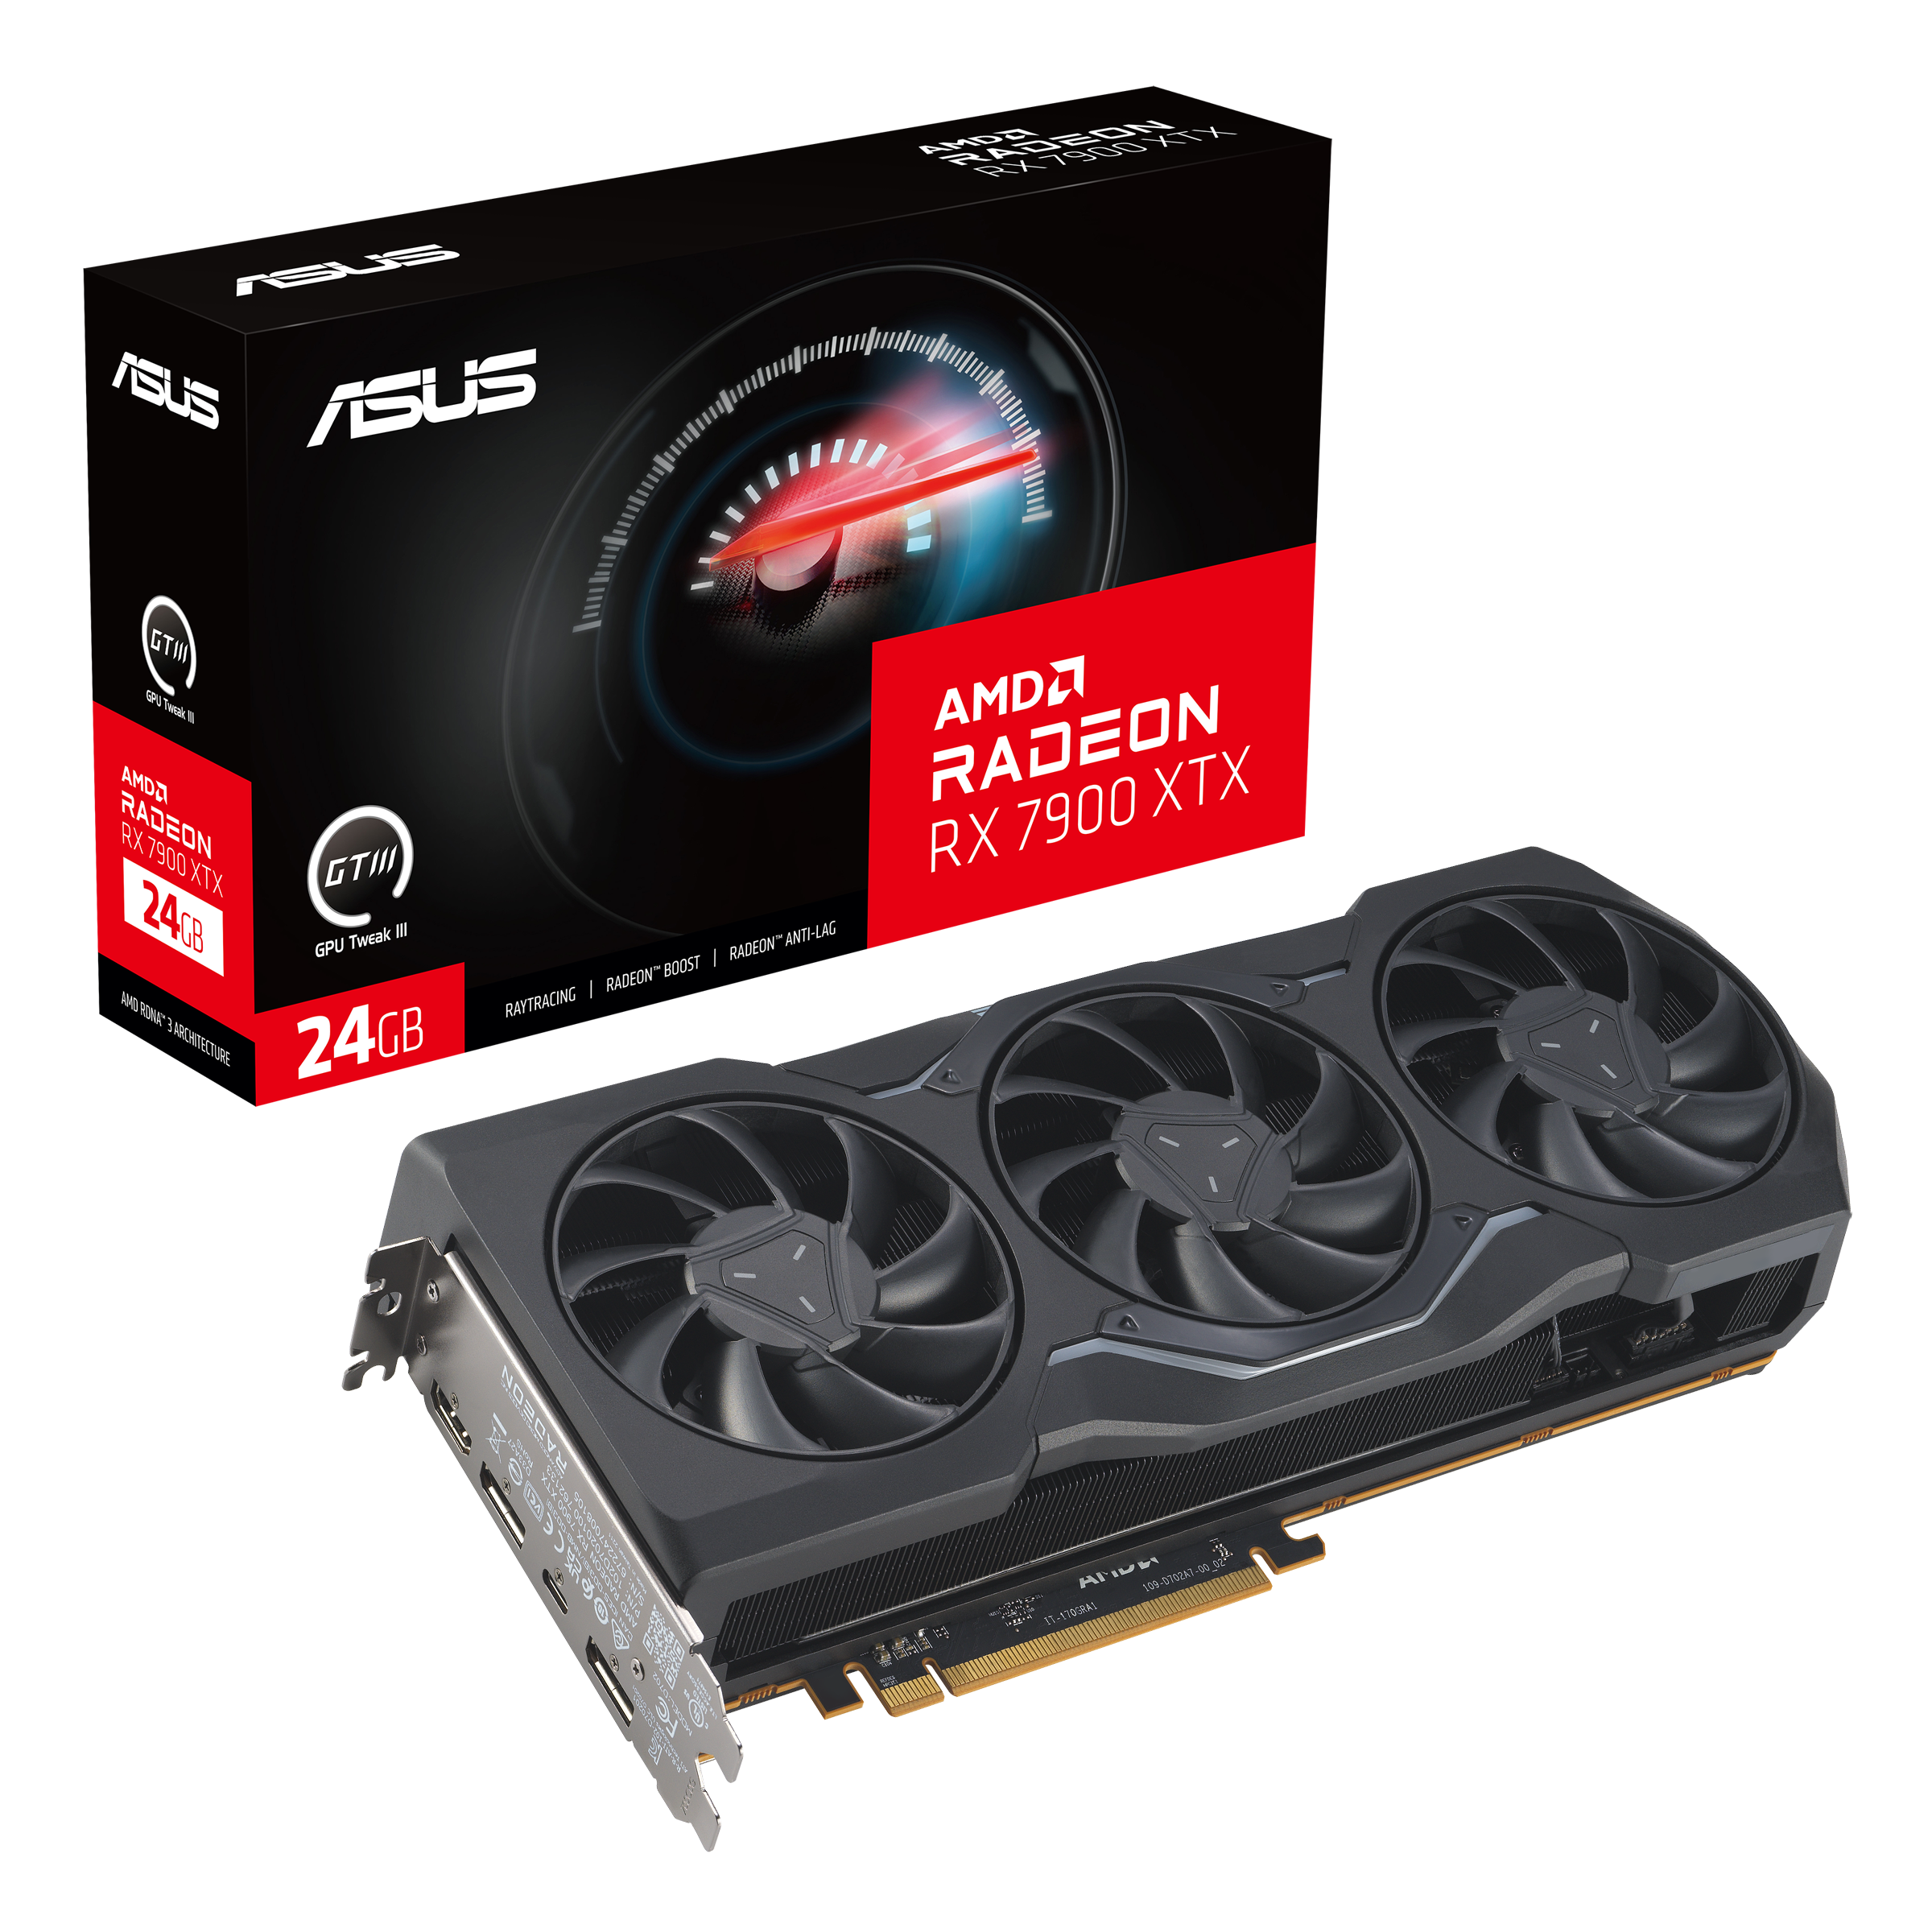 ASUS Radeon RX 7900 XTX 24GB GDDR6 | Graphics Card| ASUS Global